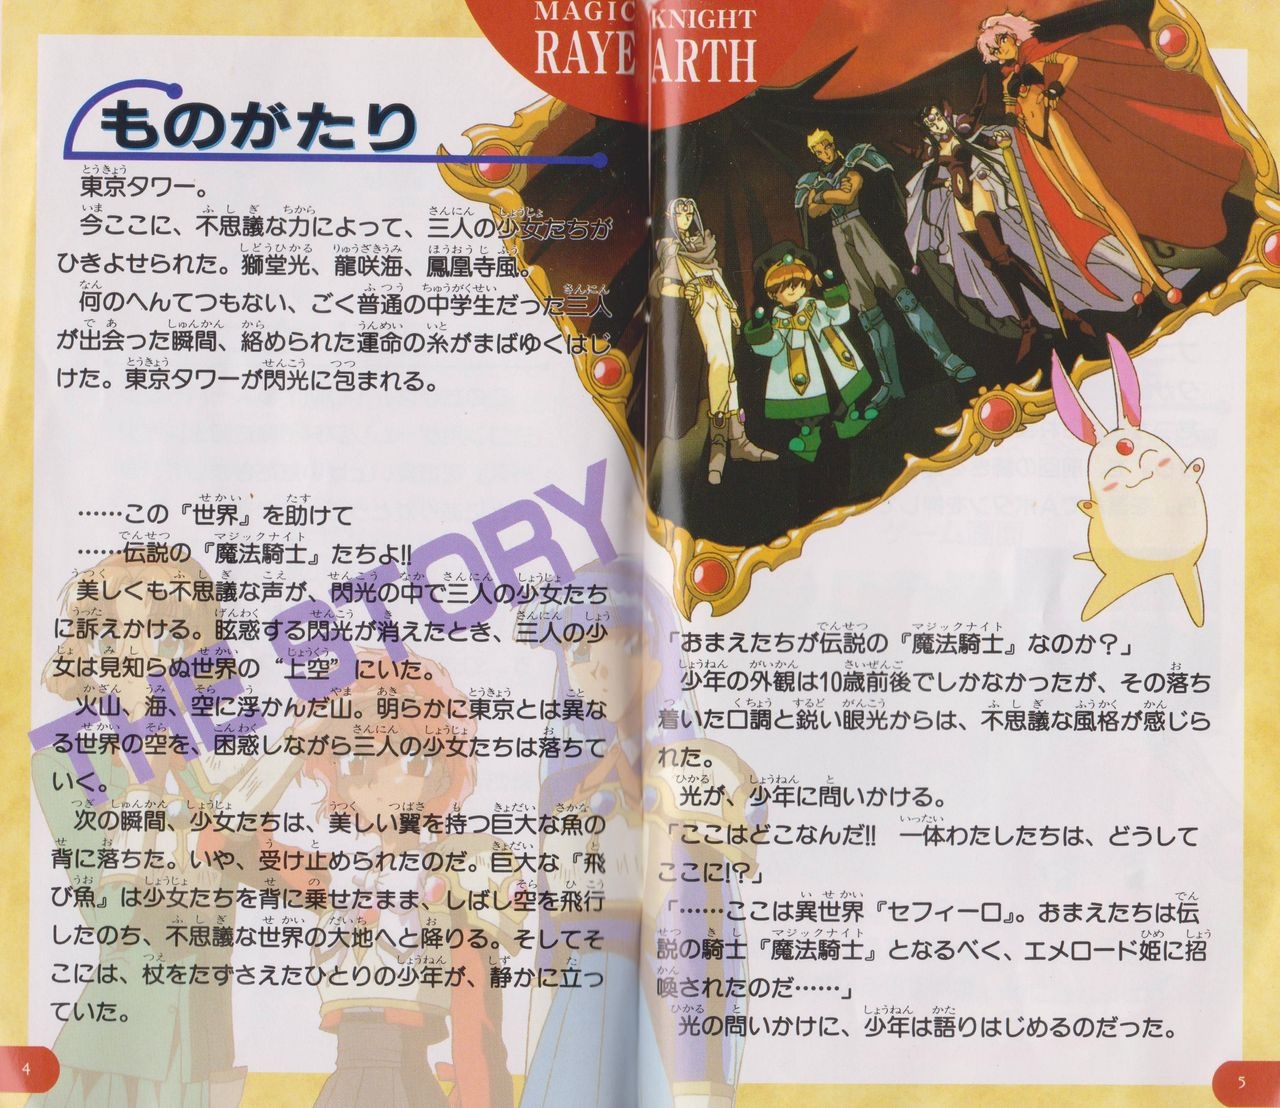 Magic Knight Rayearth - Box & Manual Scans [Super Famicom] 5